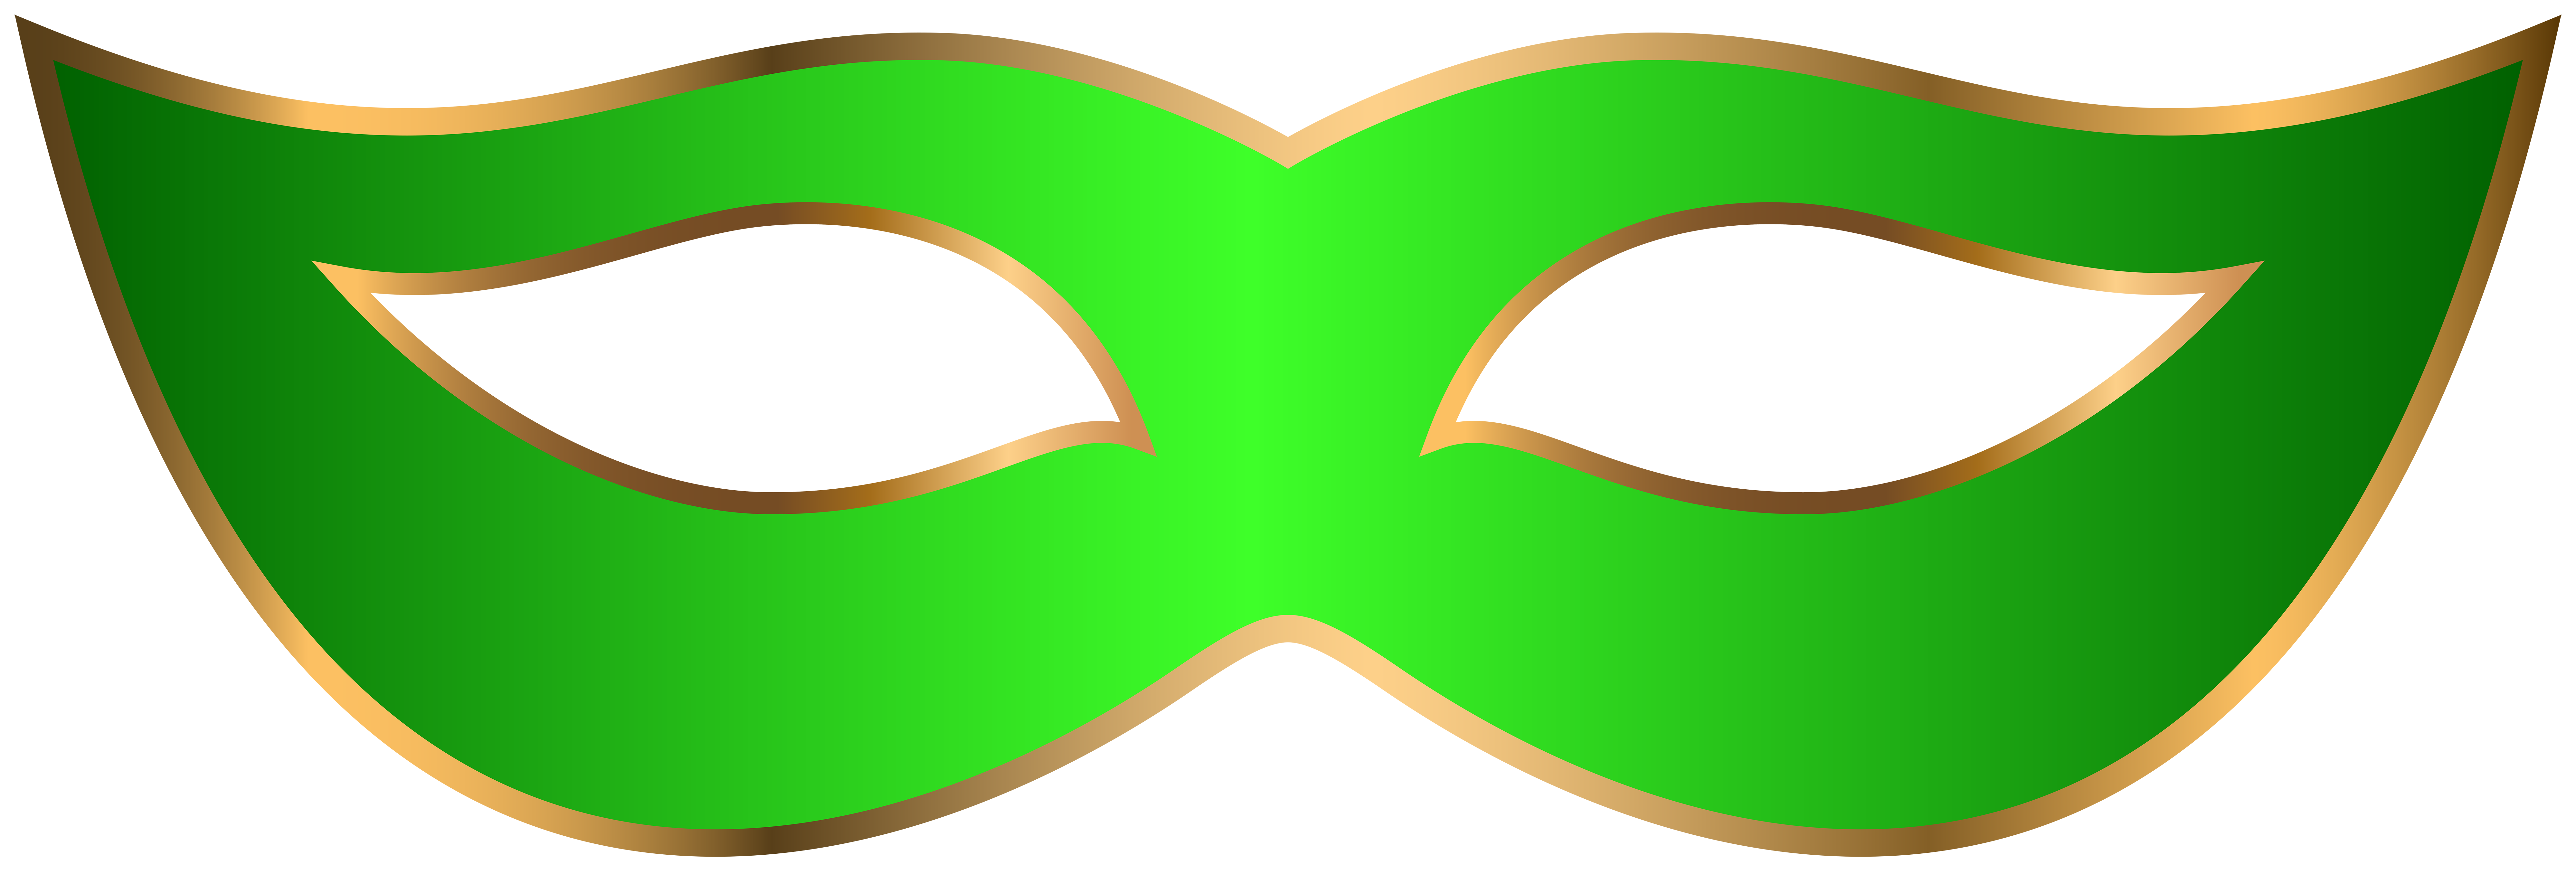 Green Carnival Mask PNG Clip Art Transparent Image Quality Image And Transparent PNG Free Clipart